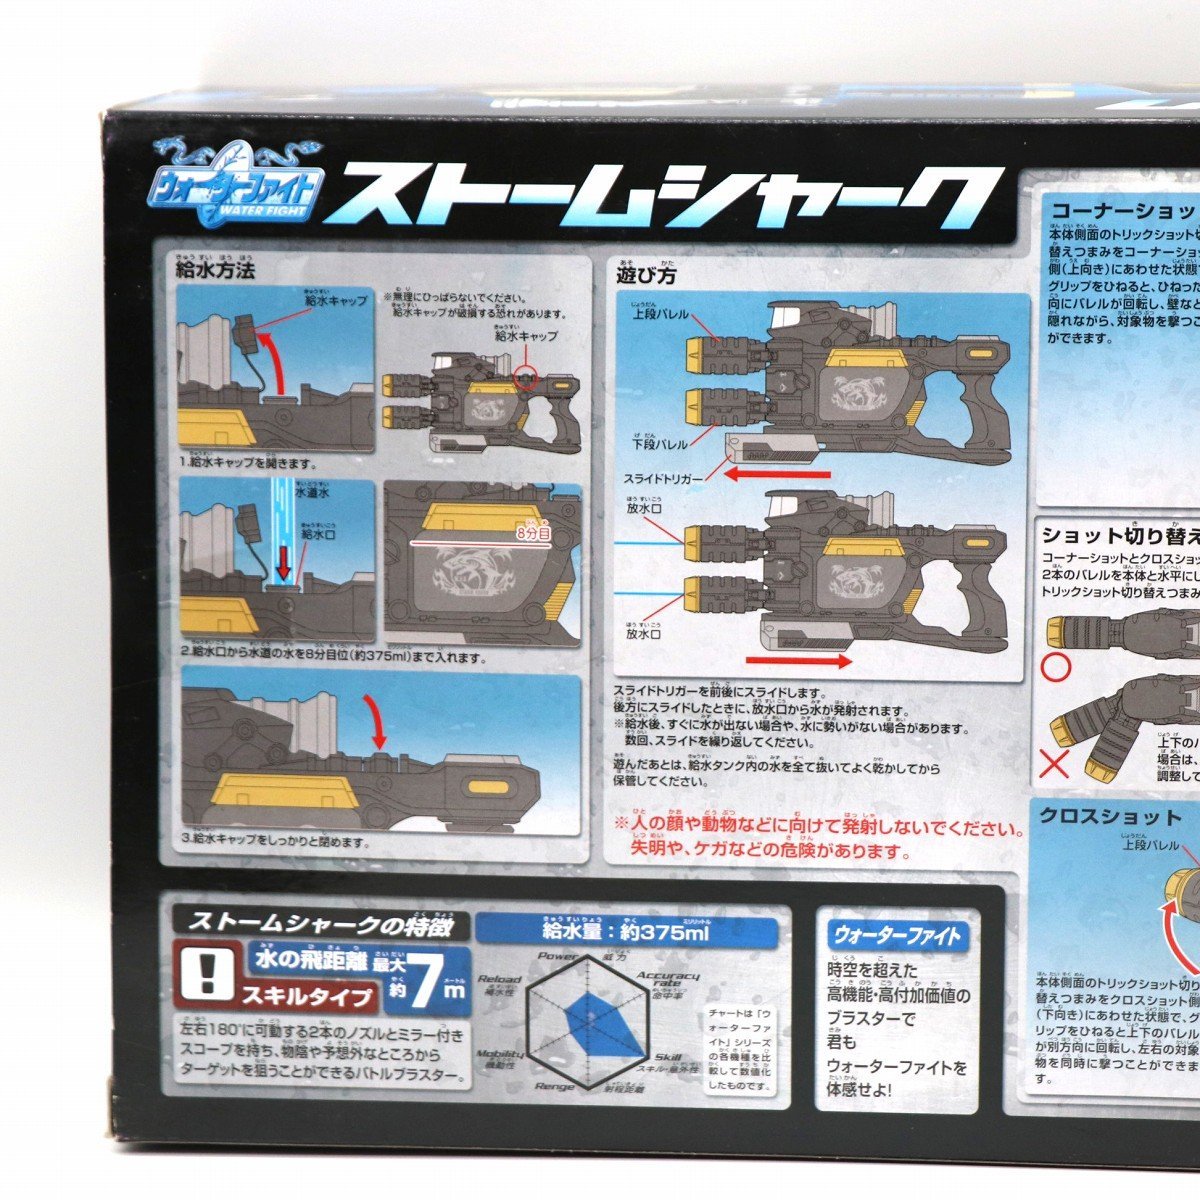 BANDAI* Bandai * water pistol * storm Shark * toy * unused goods *No.200926-036* packing size 100